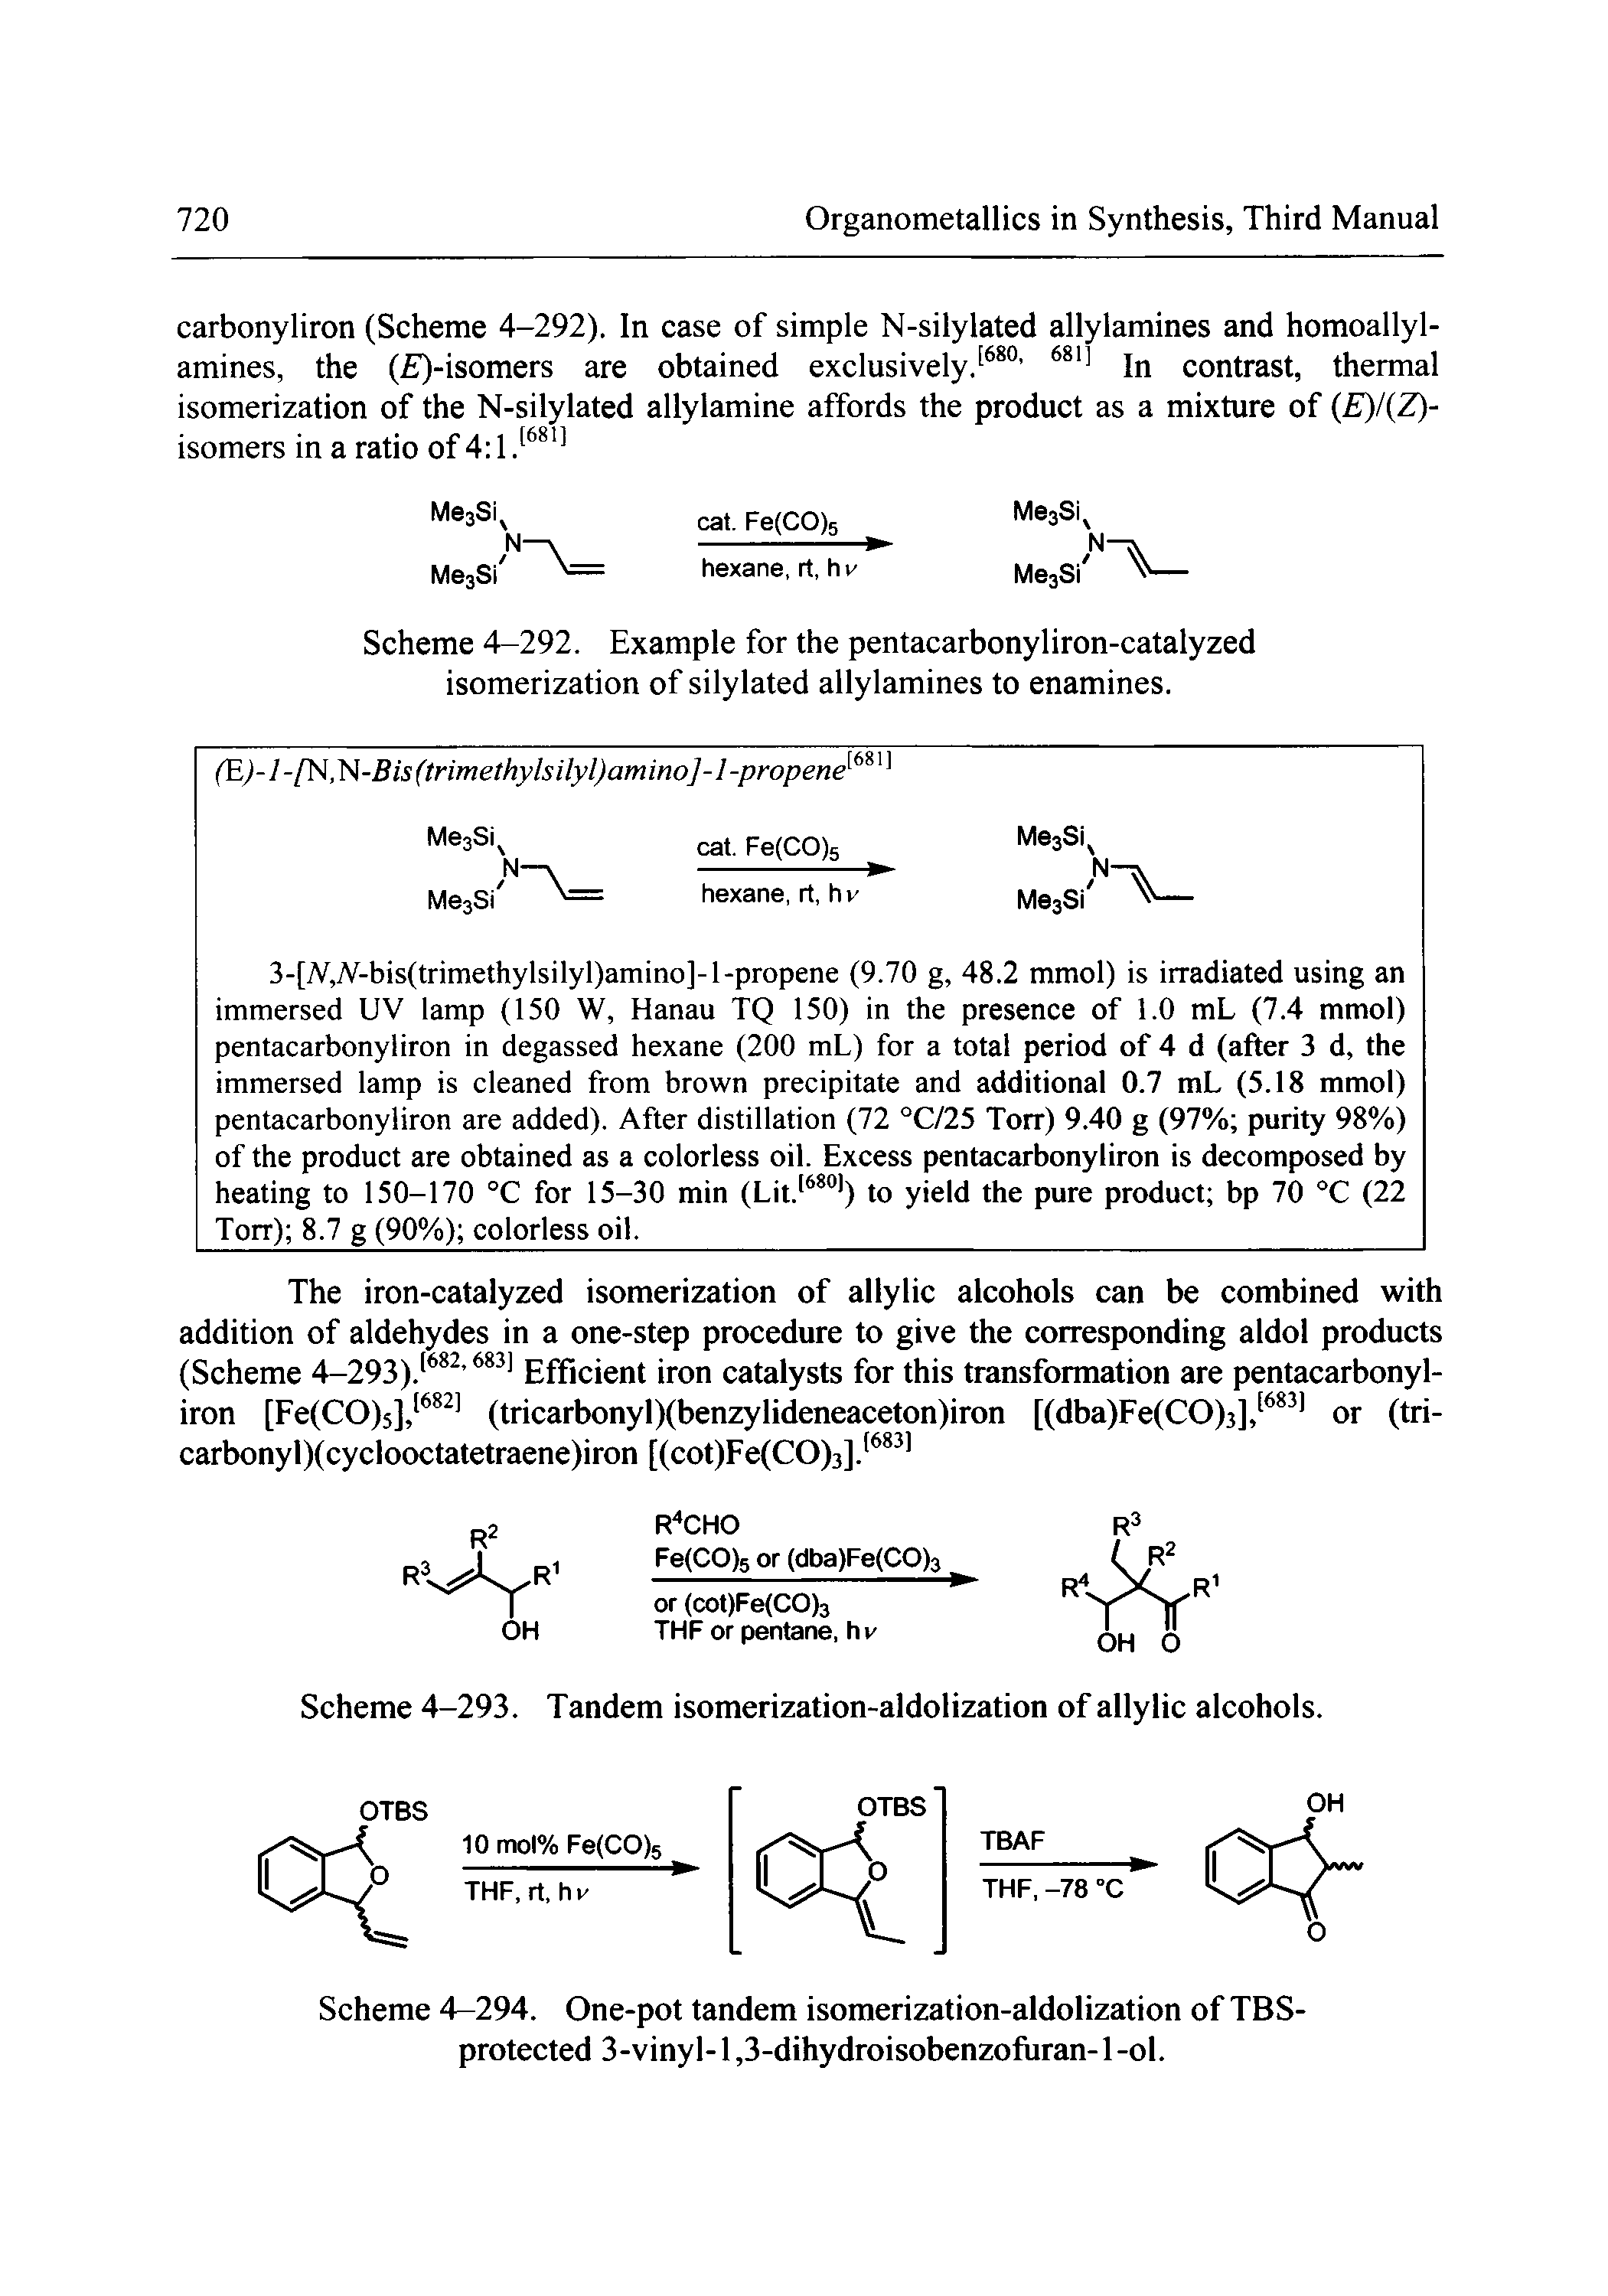 Scheme 4-293. Tandem isomerization-aldolization of allylic alcohols.